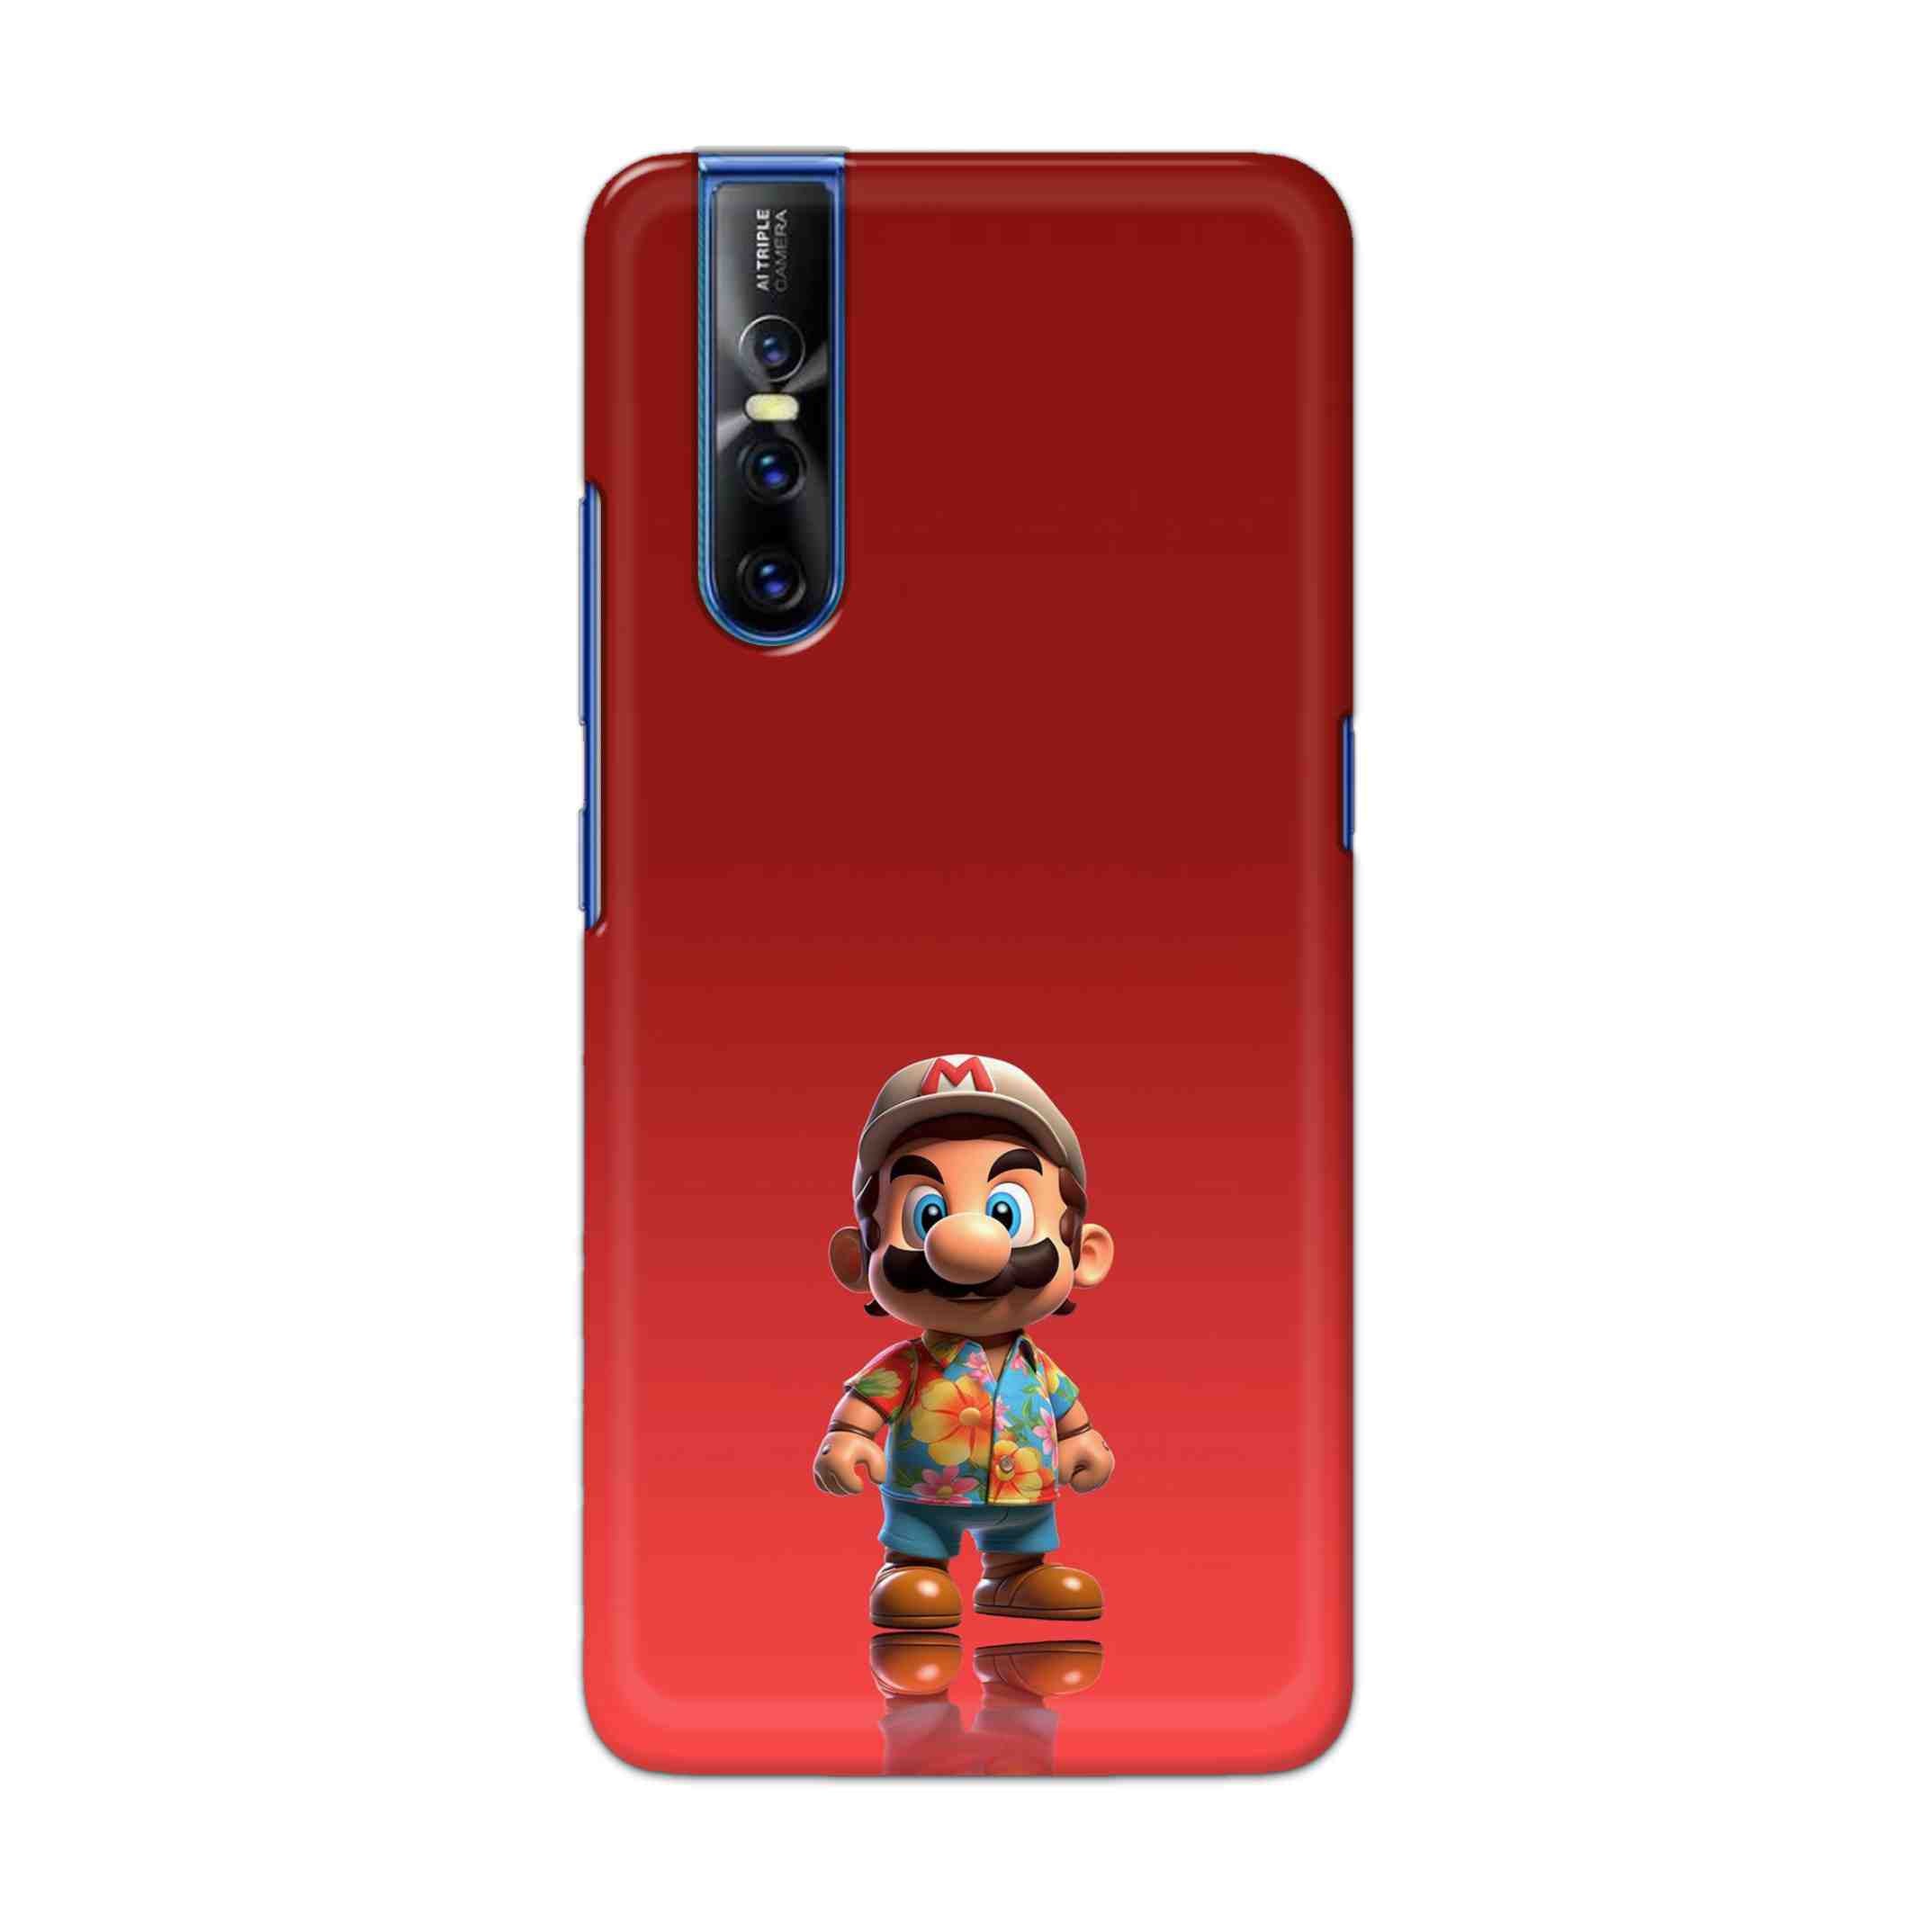 Buy Mario Hard Back Mobile Phone Case Cover For Vivo V15 Pro Online